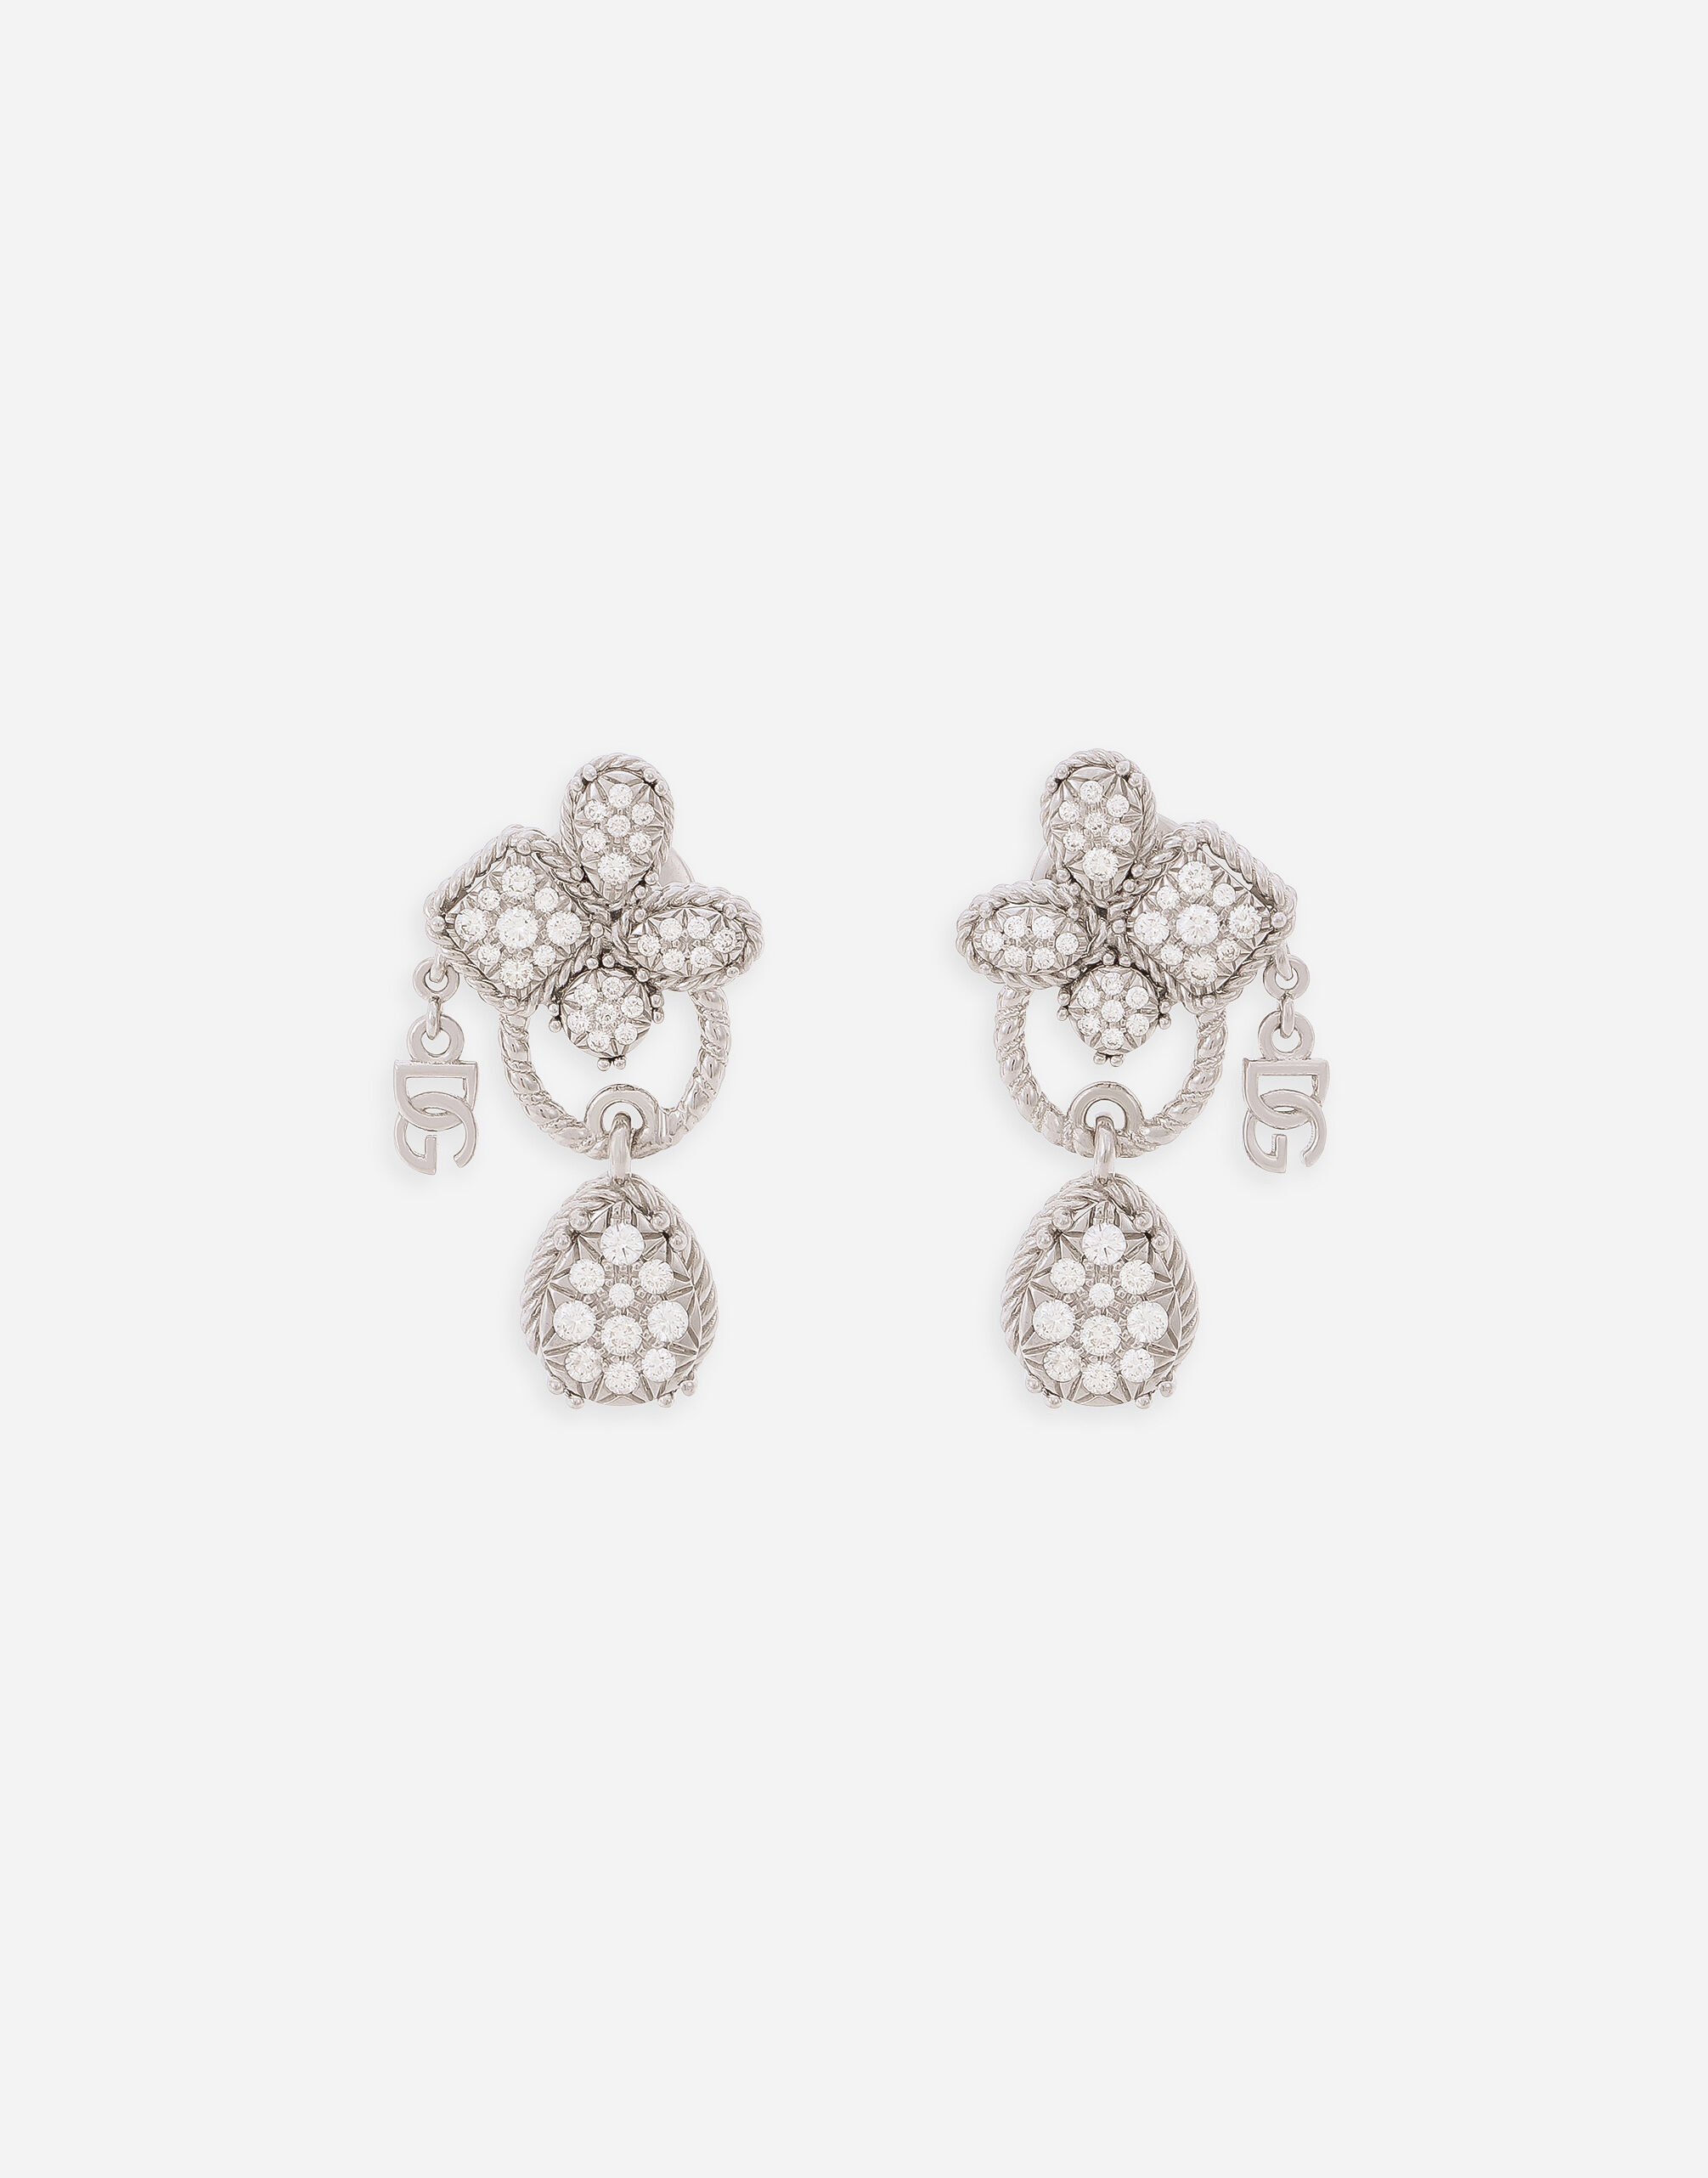 Dolce & Gabbana Easy Diamond earrings in white gold 18kt and diamonds pavé Gold WSQB1GWPE01